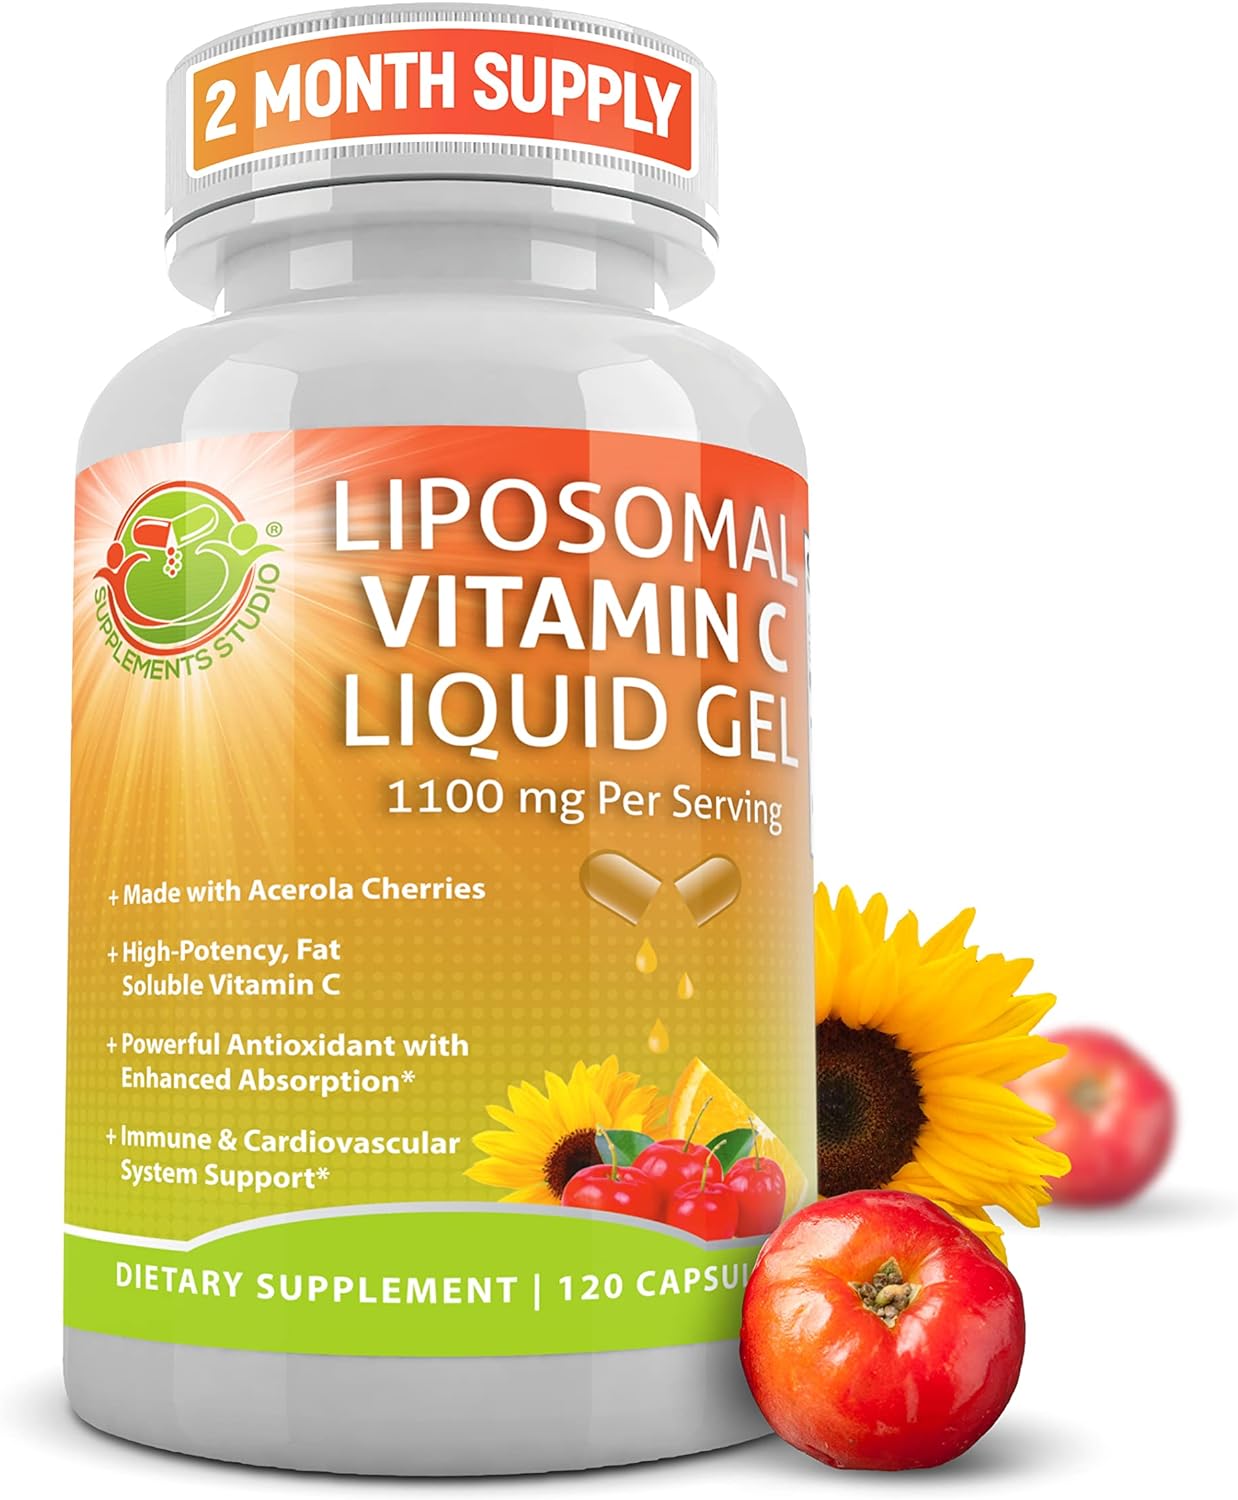 Liposomal Vitamin C Liquid Gel Capsules - 1100mg - Made with Organic Acerola Cherries, High Potency Vitamin C Liposomal Immune Support Supplement with Enhanced Absorption & Bioavailability - 120 count